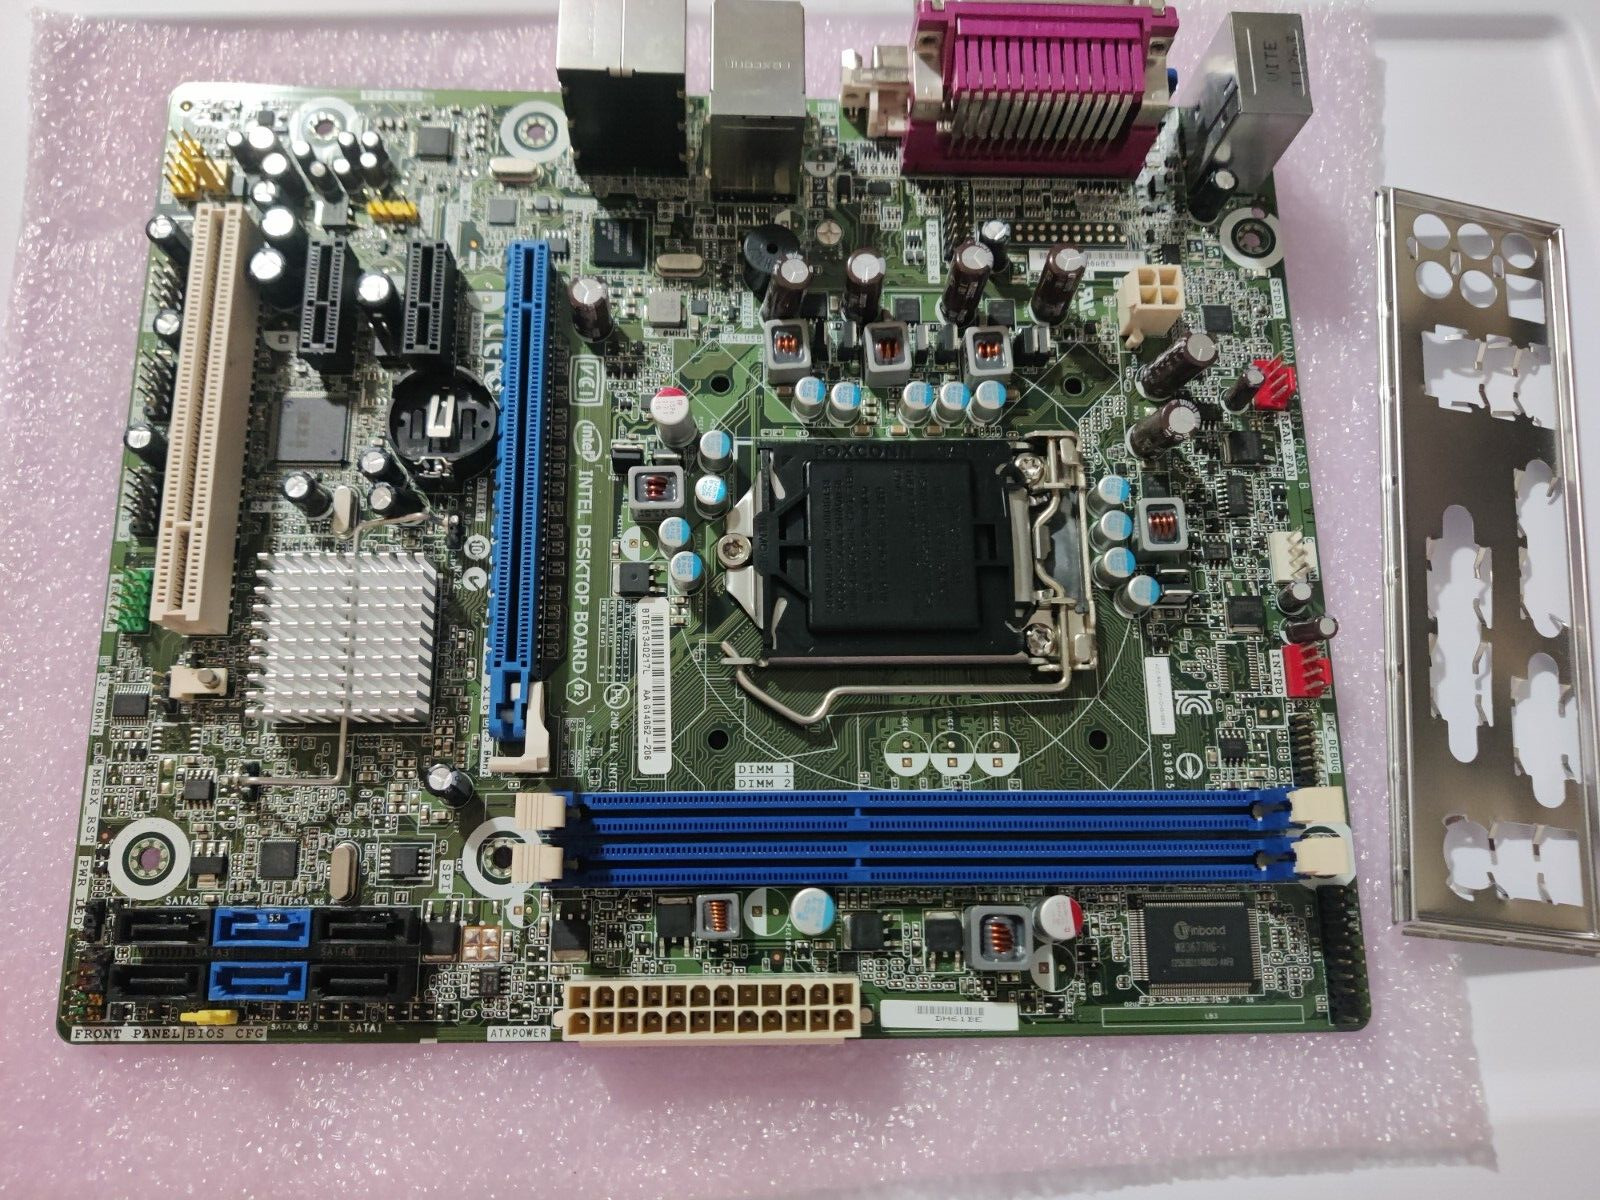 Intel DH61BE G14062-206 LGA 1155 Socket Desktop mATX MicroATX Motherboard USB3.0